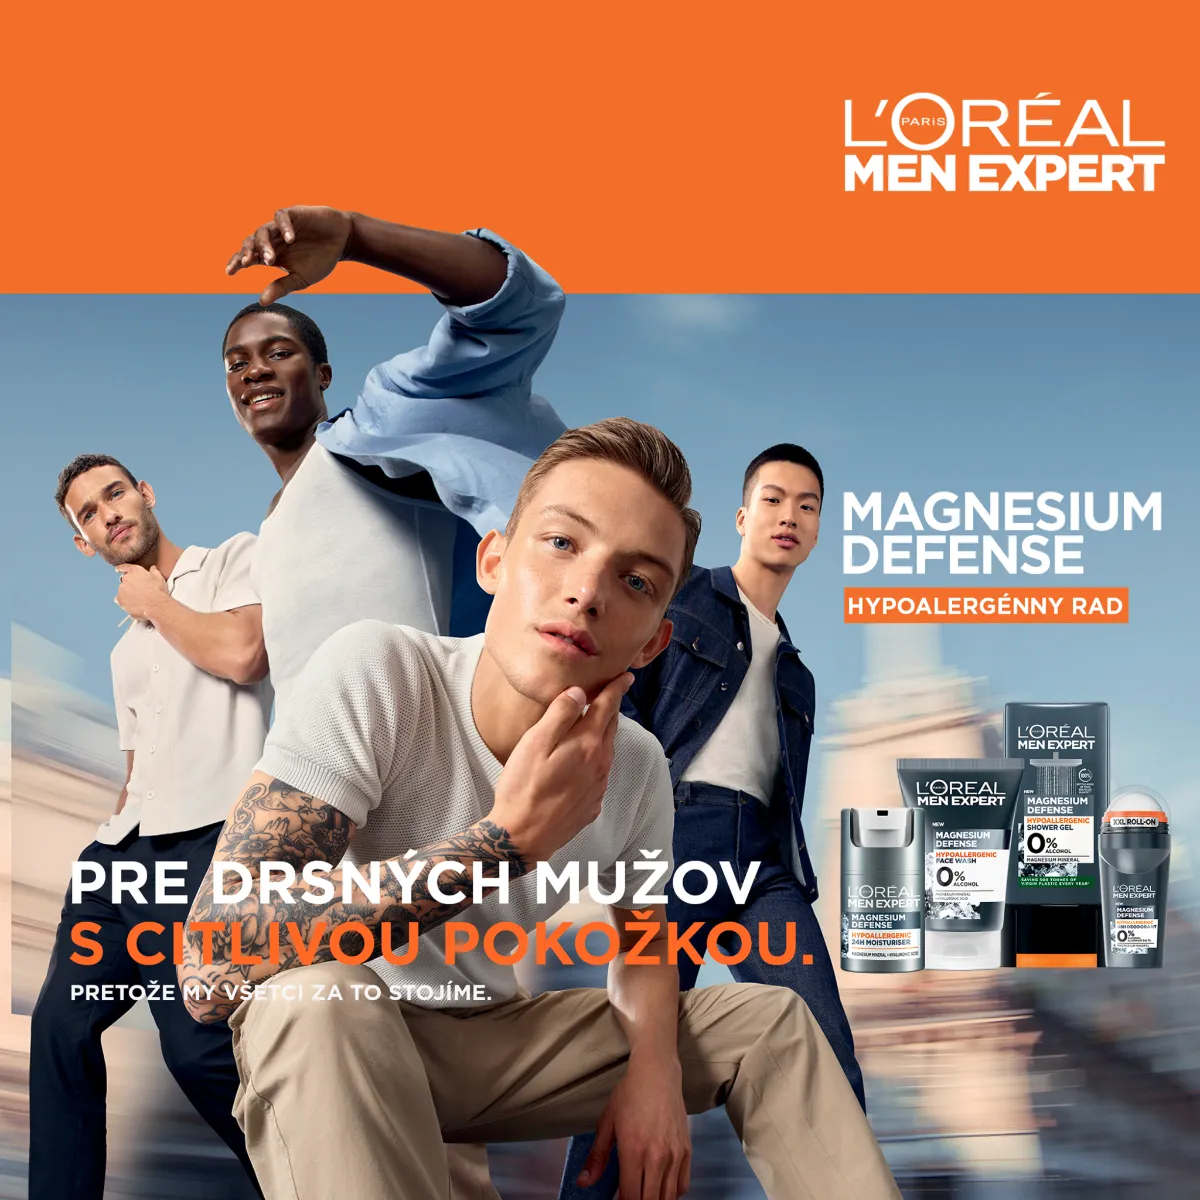 L'Oreal Men Expert Magnesium Defense denný krém 1×50 ml, denný krém